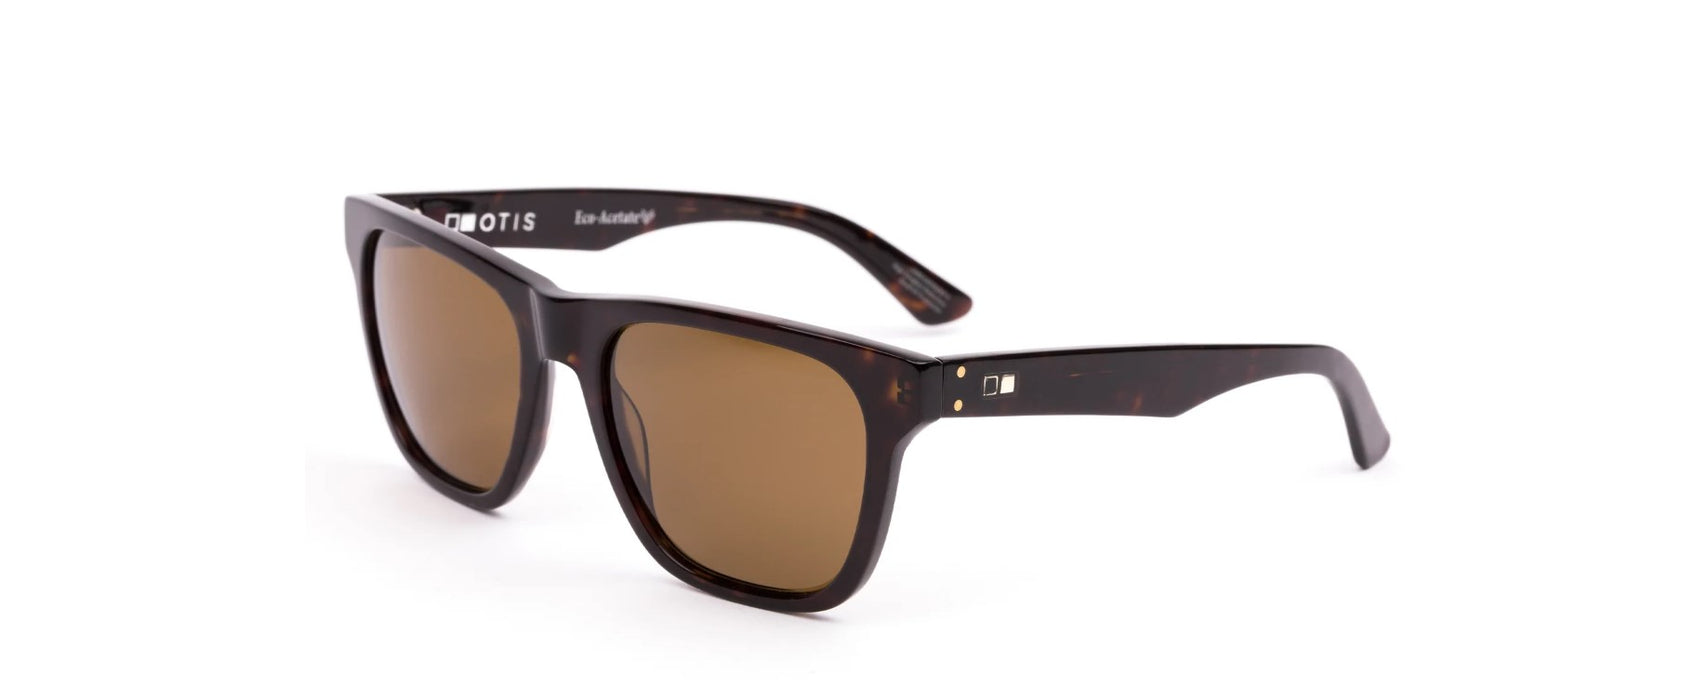 Otis Eyewear Guilt Trip X Sunglasses